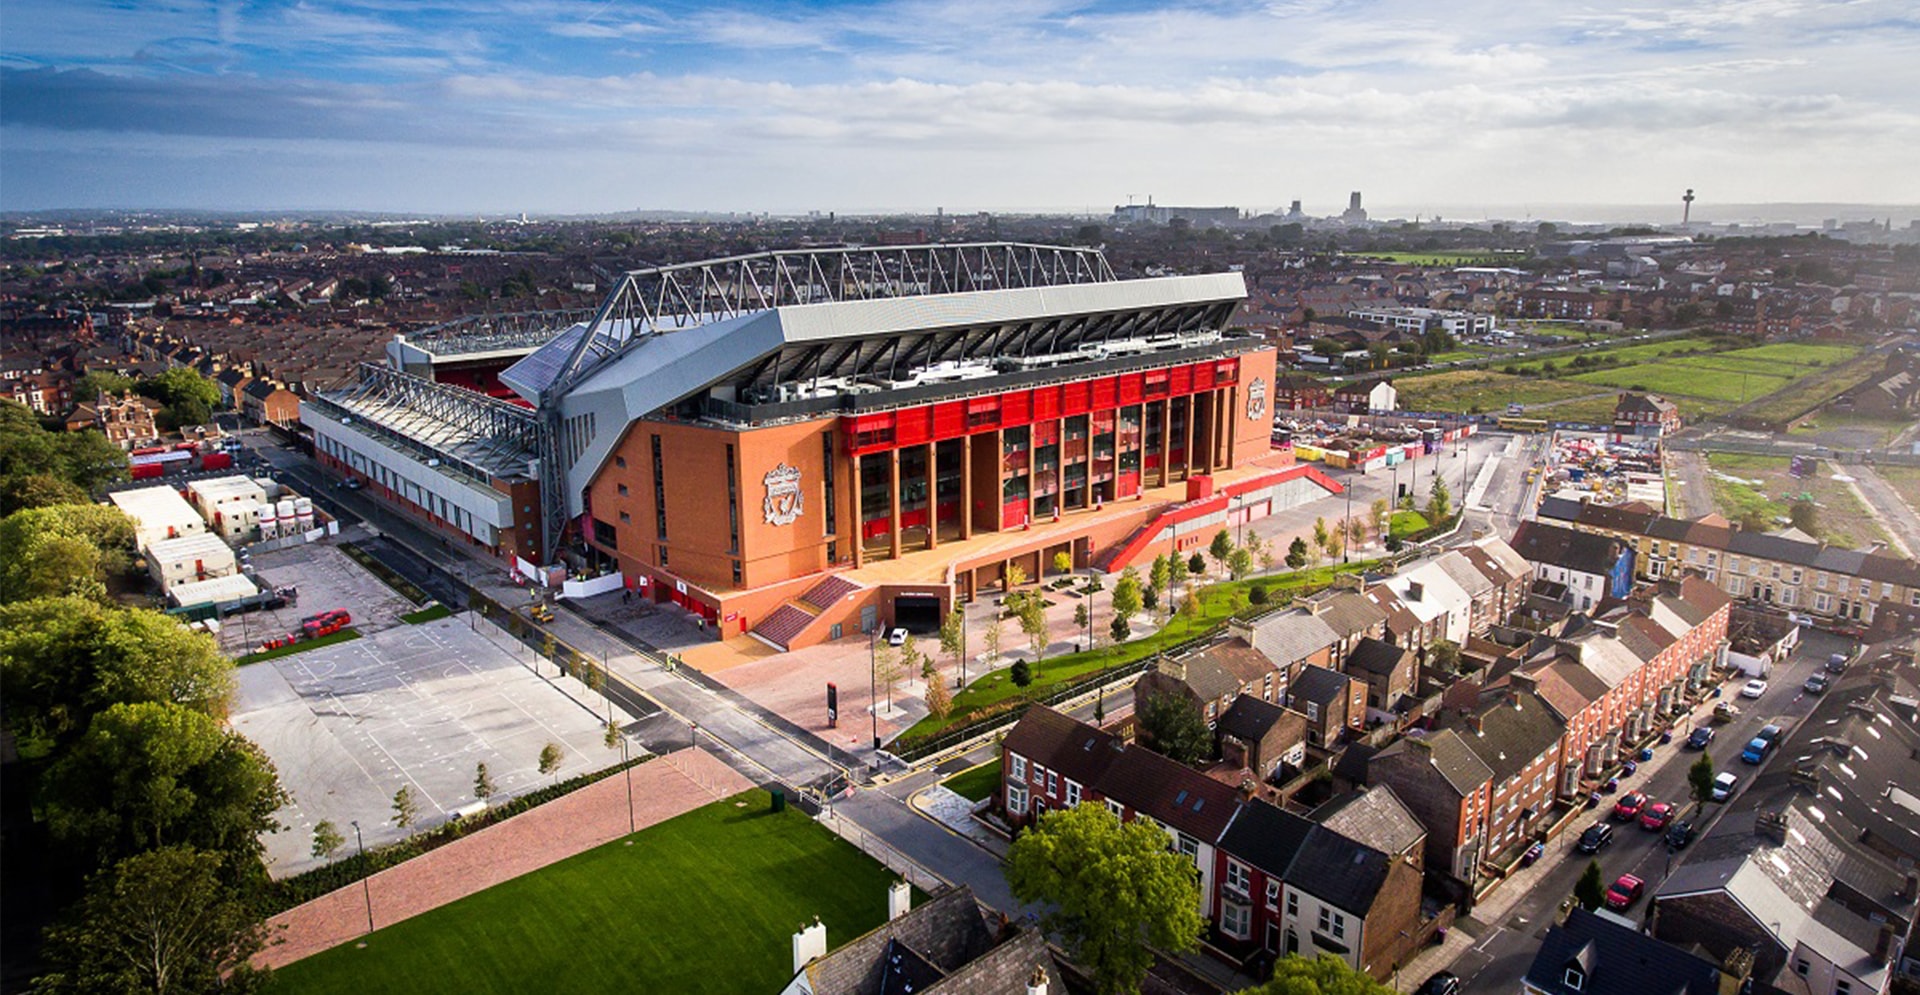 Liverpool Football Club's Anfield stadium